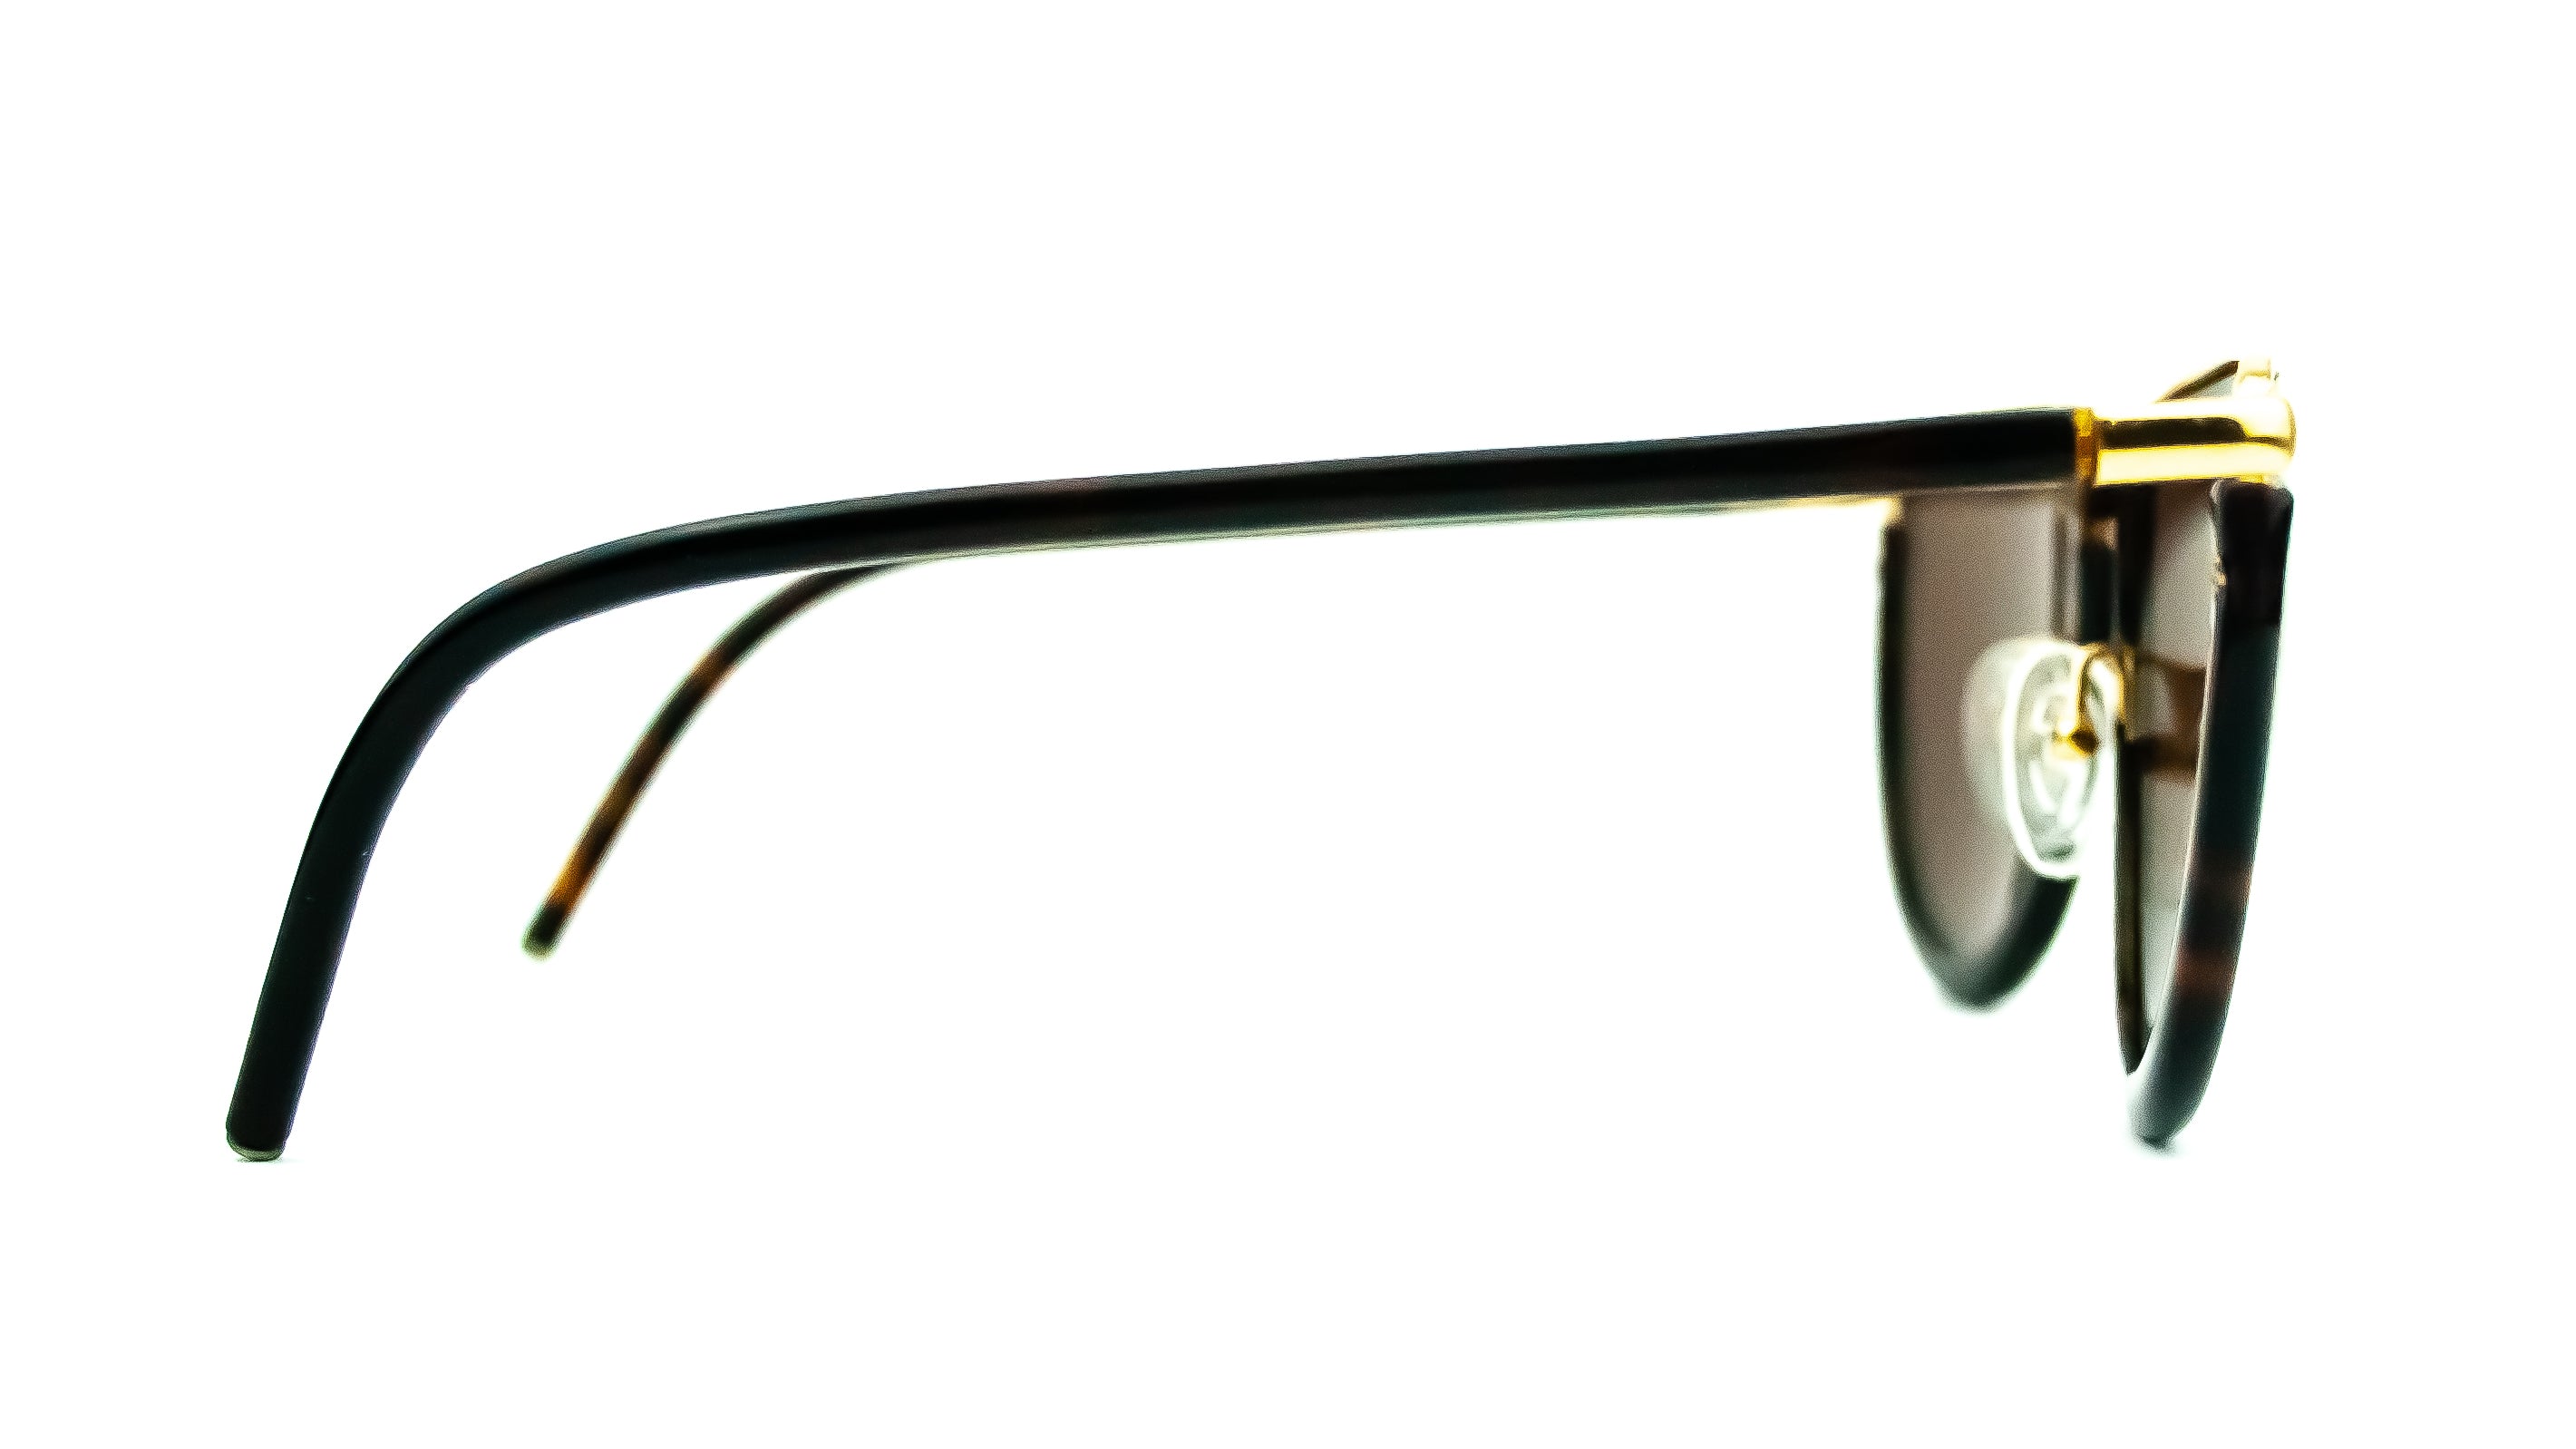 Vintage Gianfranco Ferre Gff 10/S Sunglasses